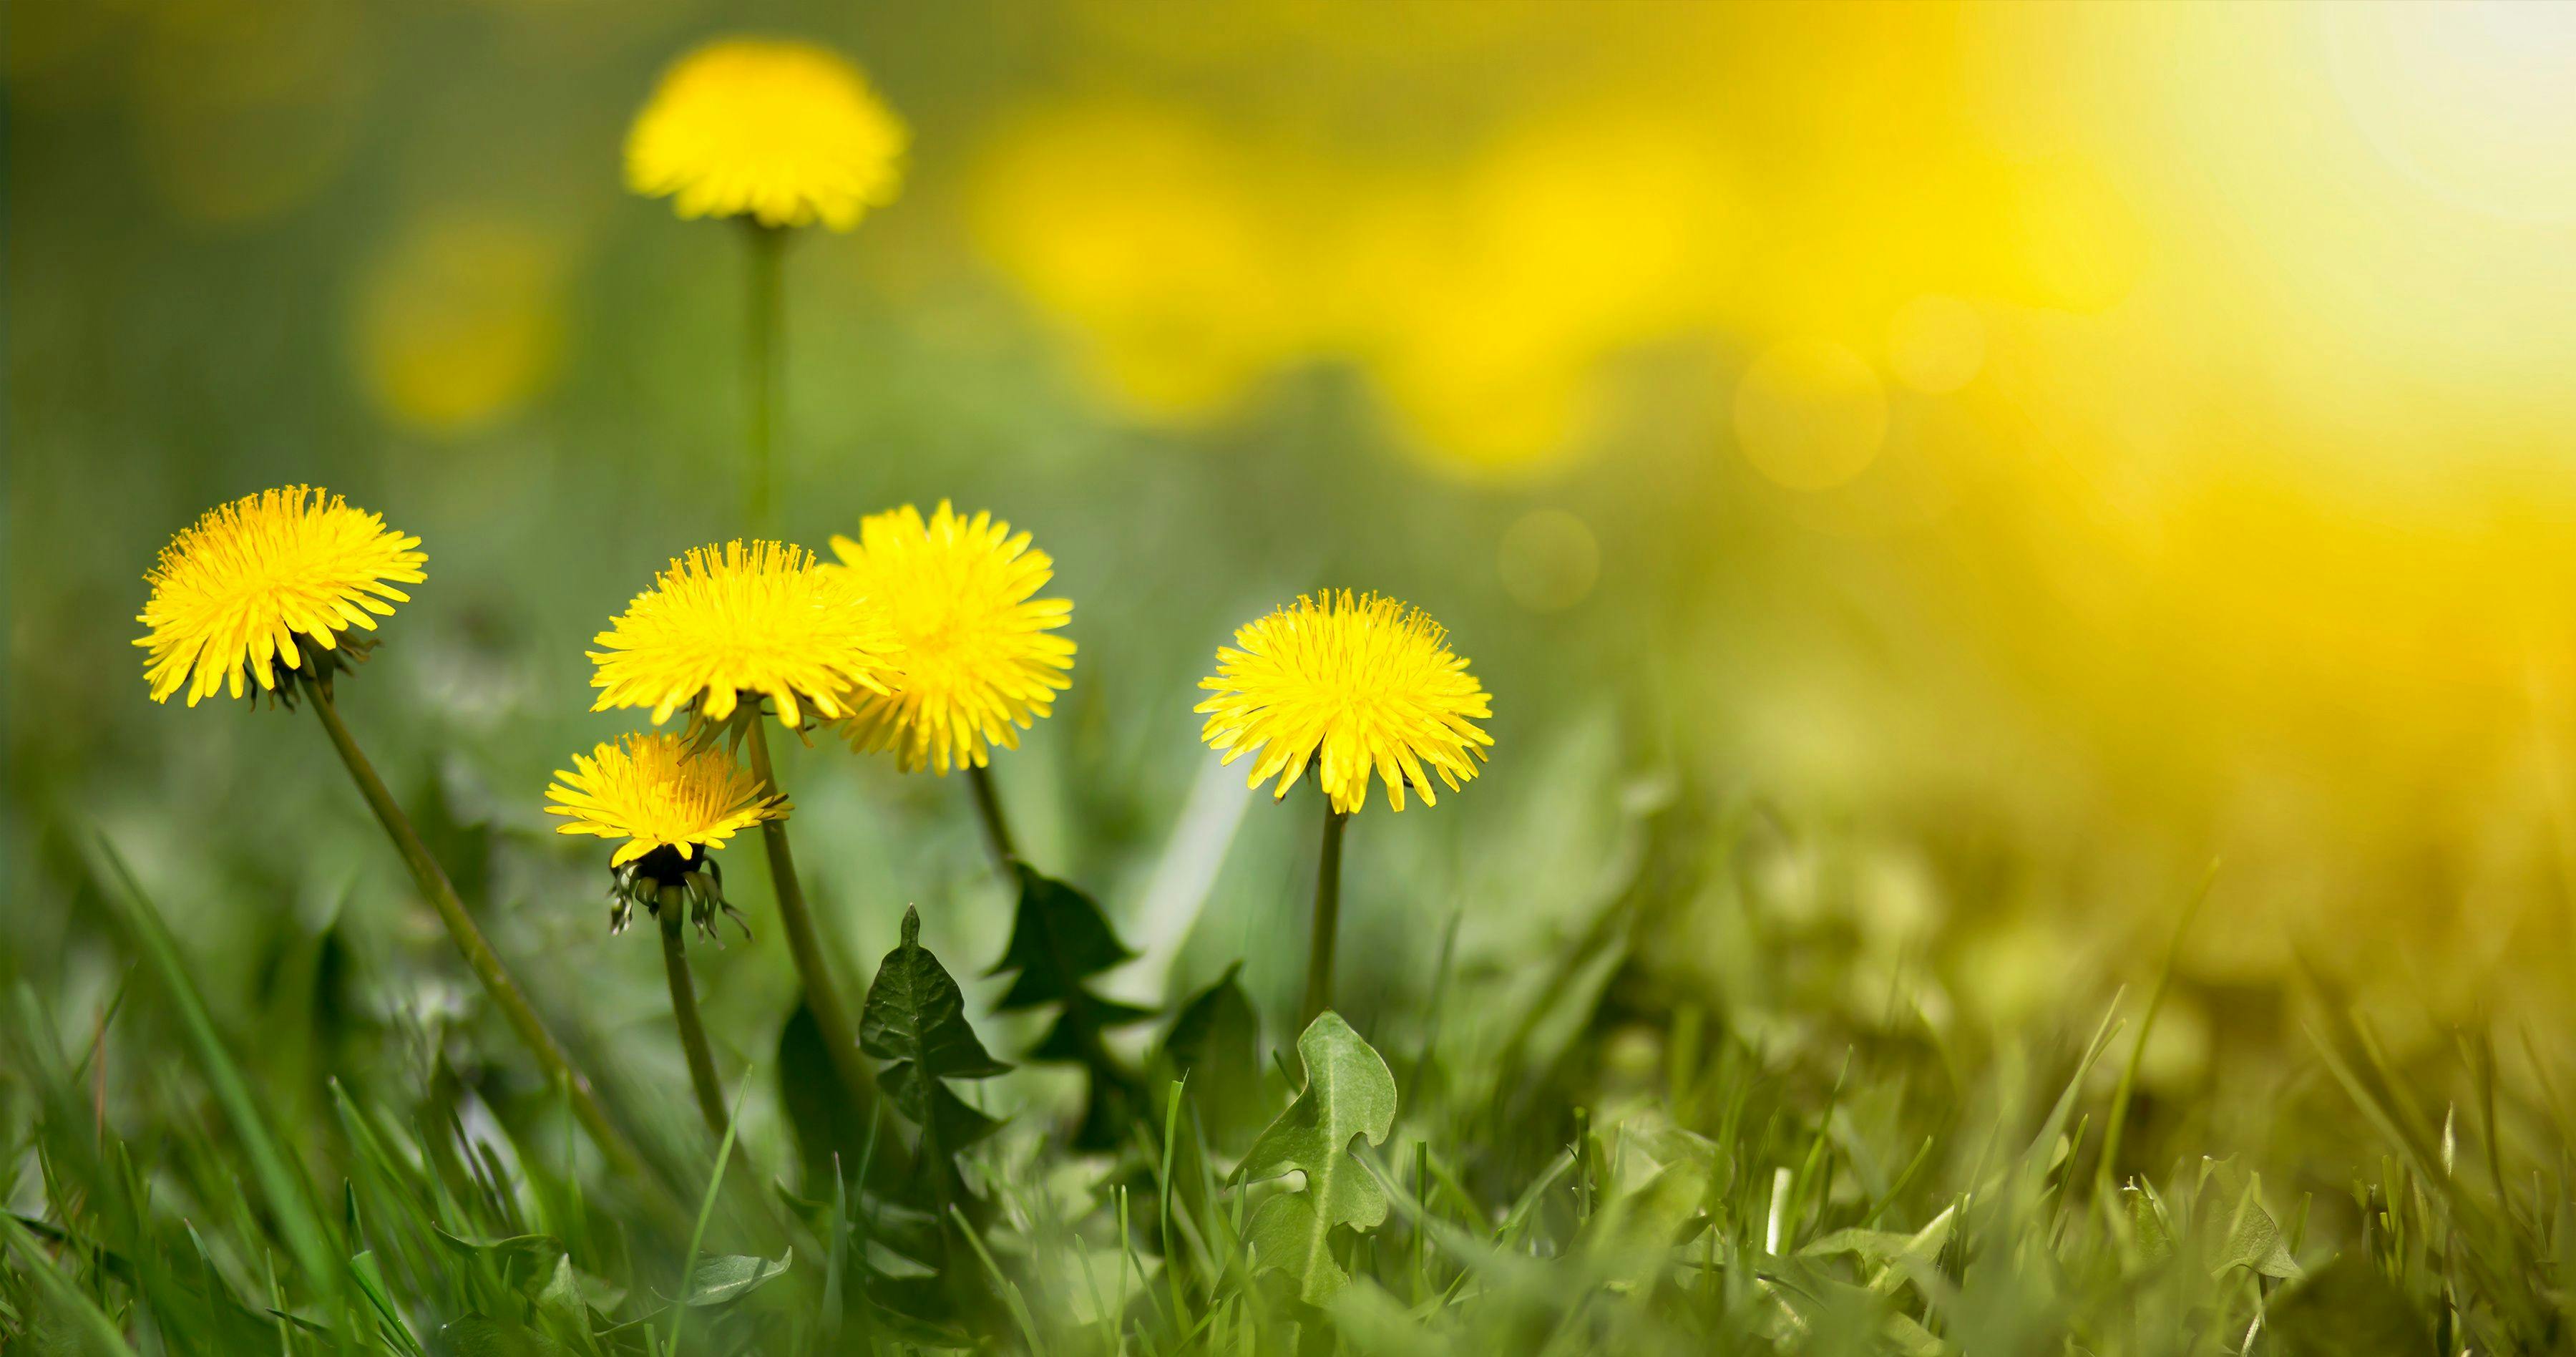 Edible fresh yellow blowball dandelion flowers, spring, summer | Image Credit: © Reddogs - stock.adobe.com.